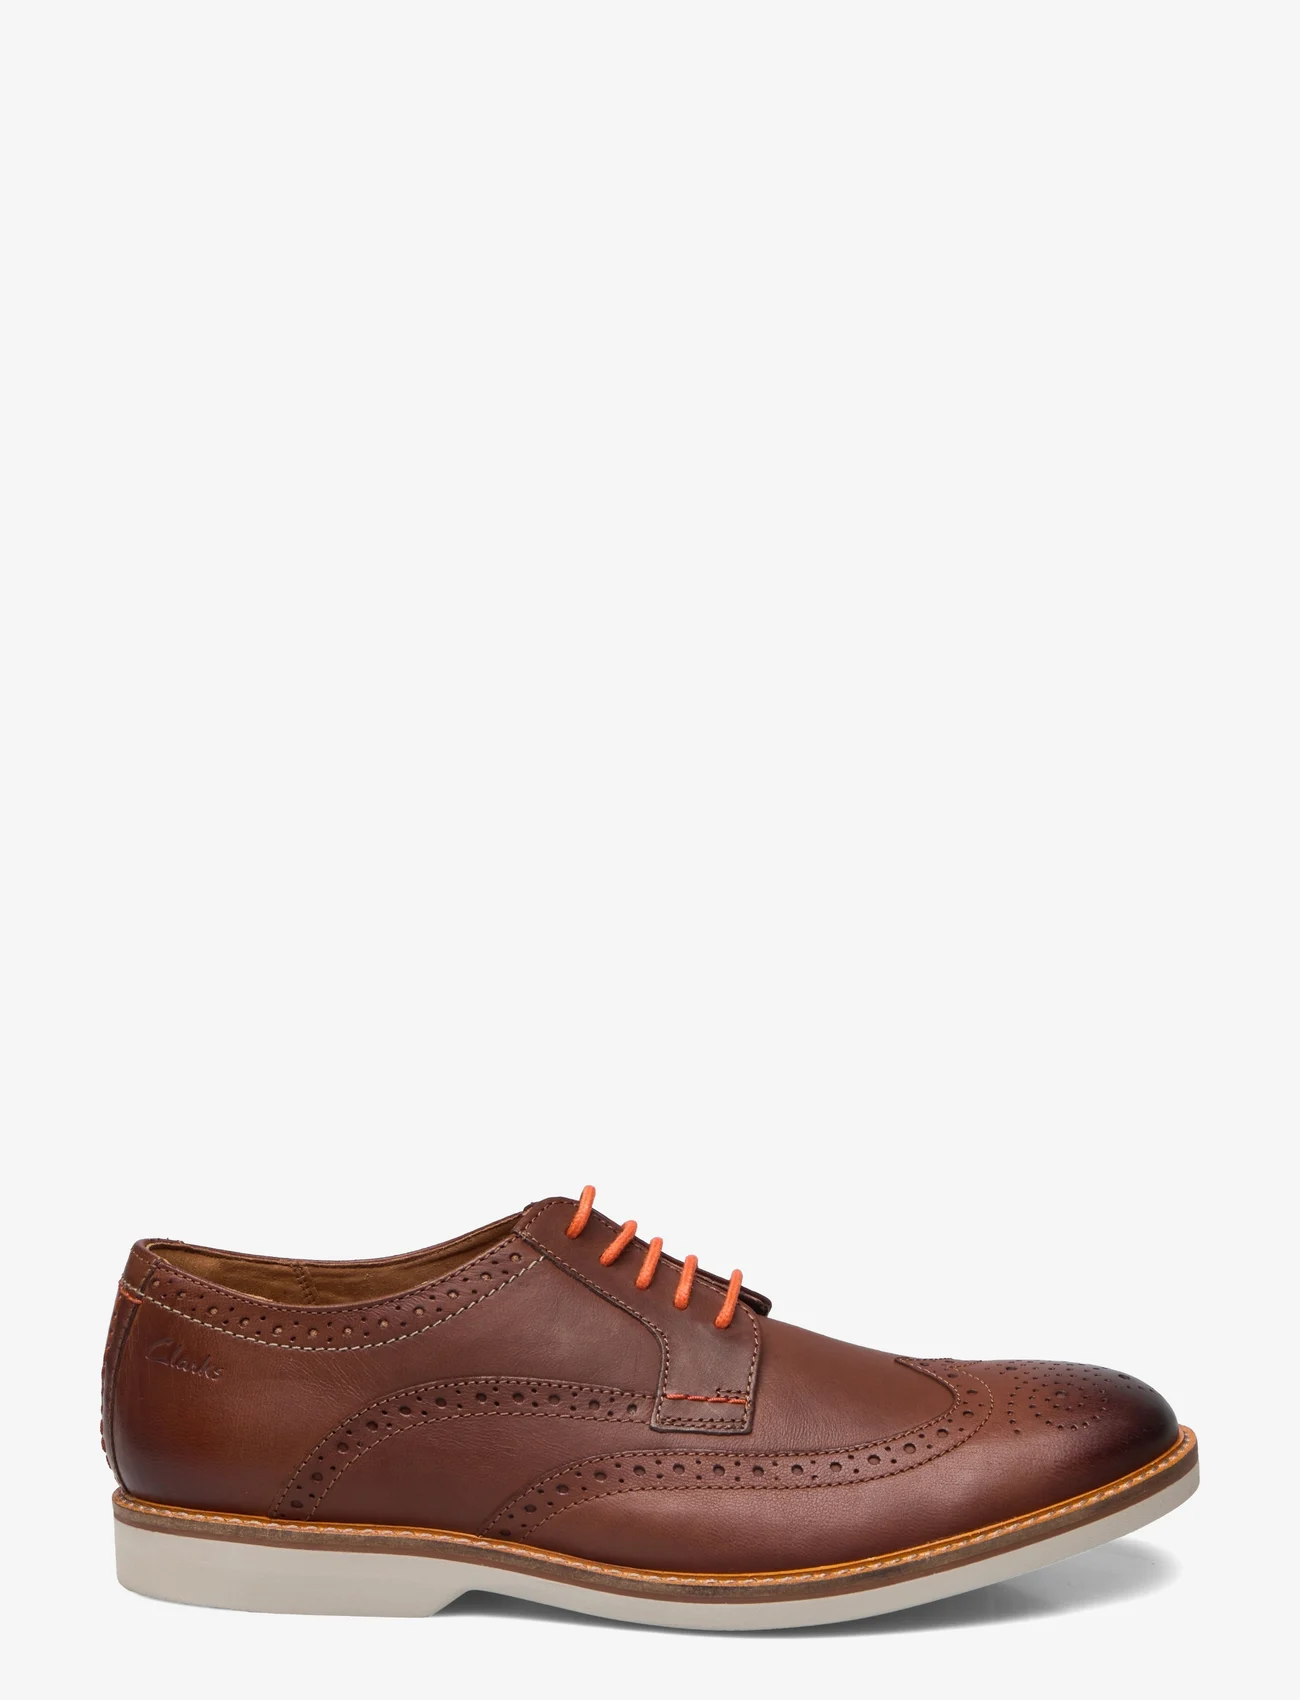 Clarks - AtticusLTLimit G - spring shoes - 5234 dark tan lea - 1